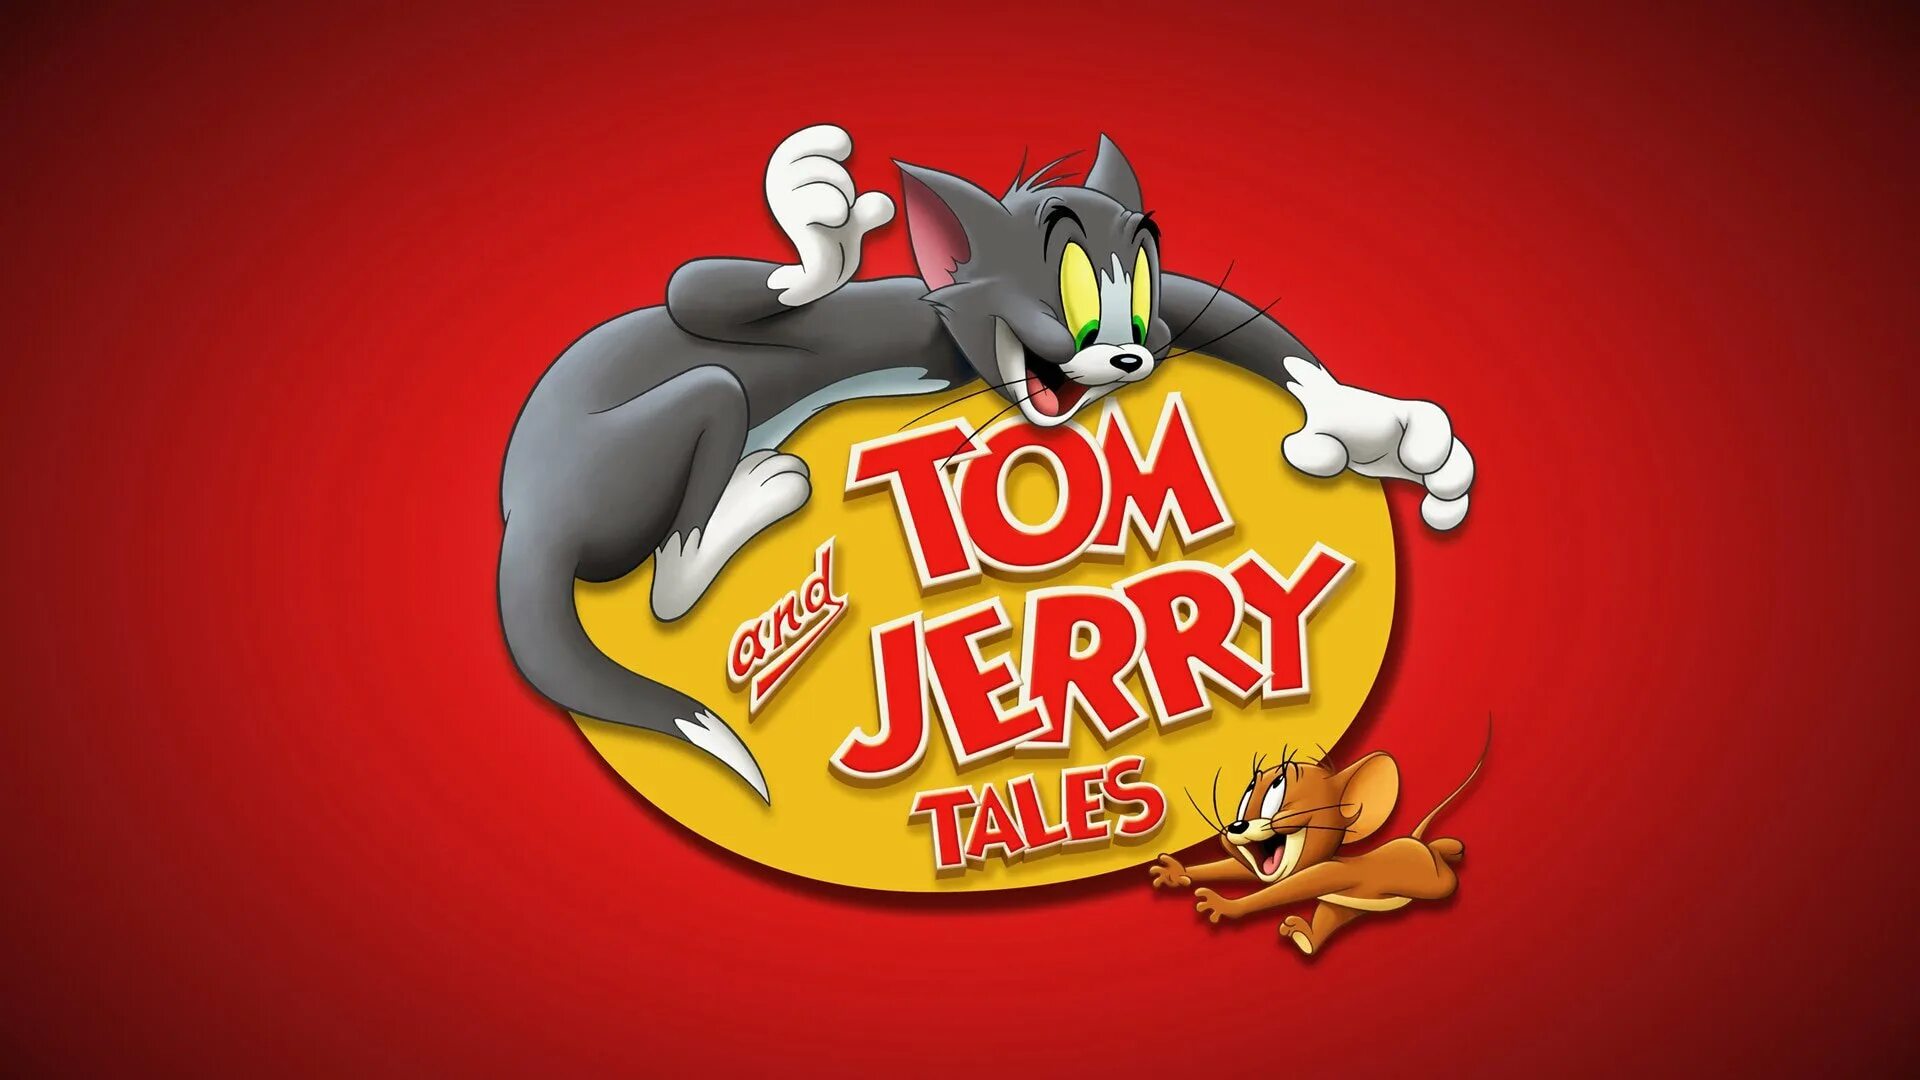 Toms tales. Том и Джерри. Tom and Jerry Tales. Tom and Jerry Tales игра. Том и Джерри 1949.